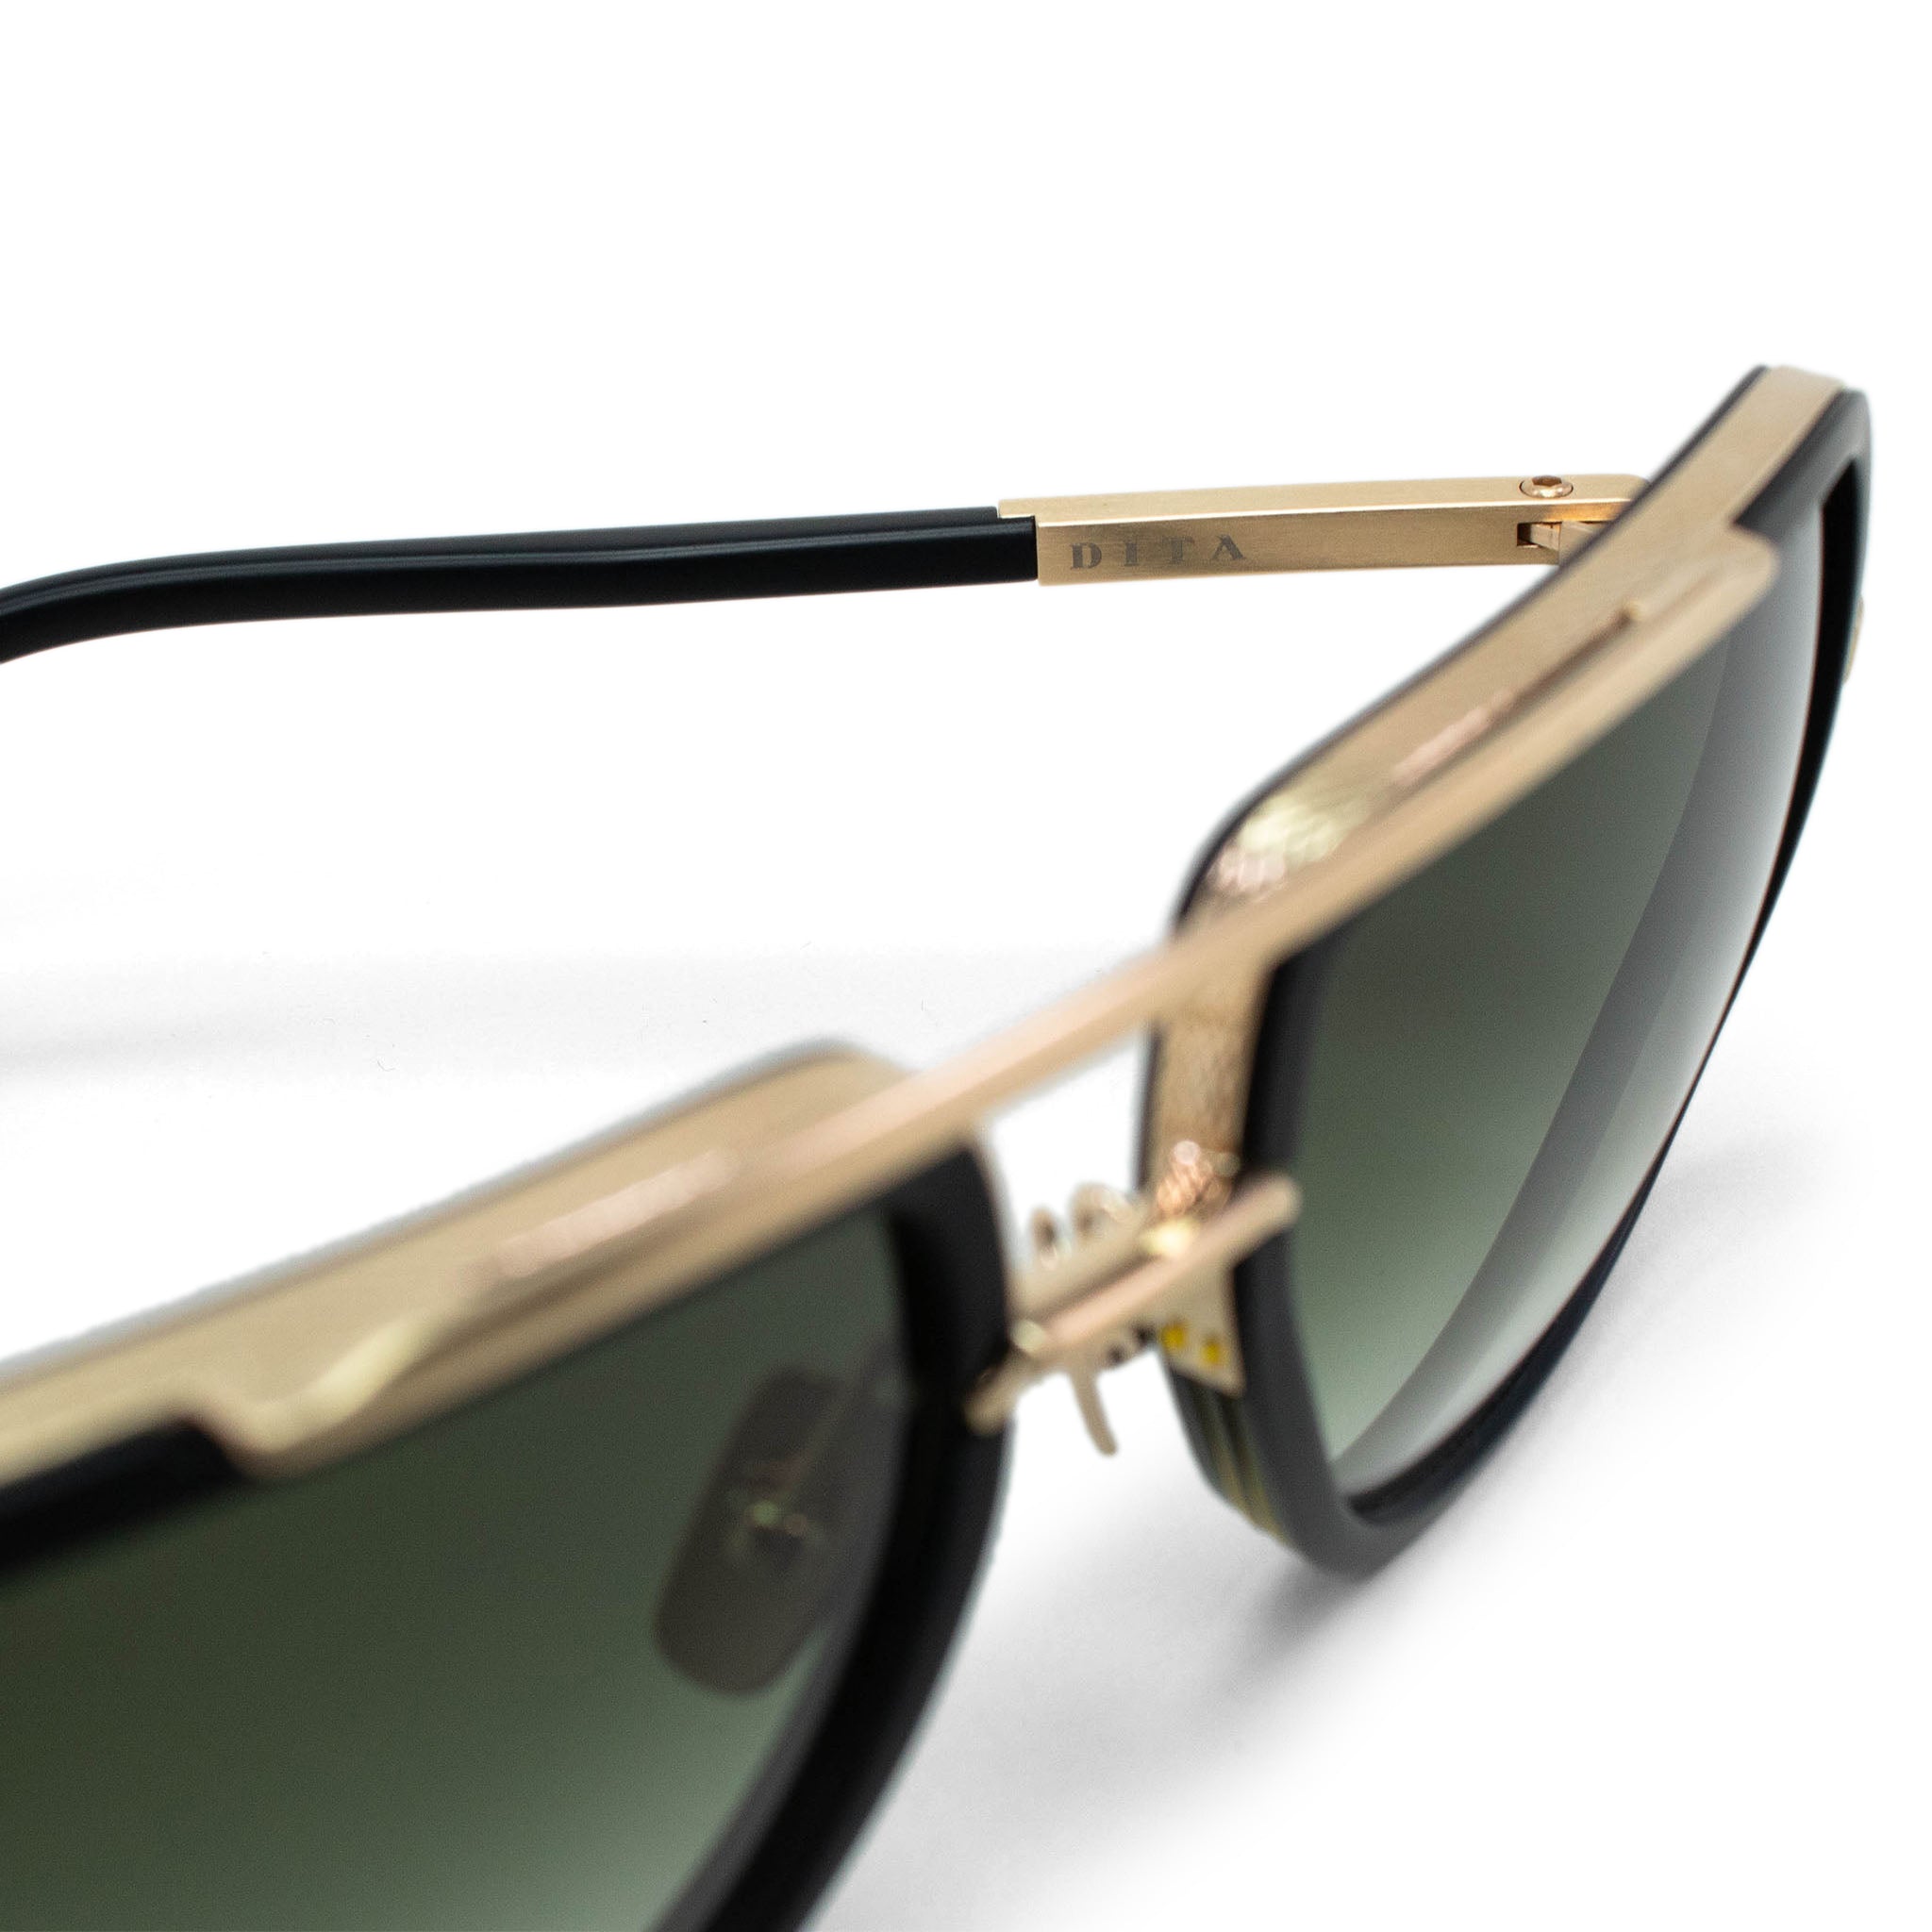 Image Of Dita Eyewear DRX-2030 Mach One Black White Gold Sunglasses